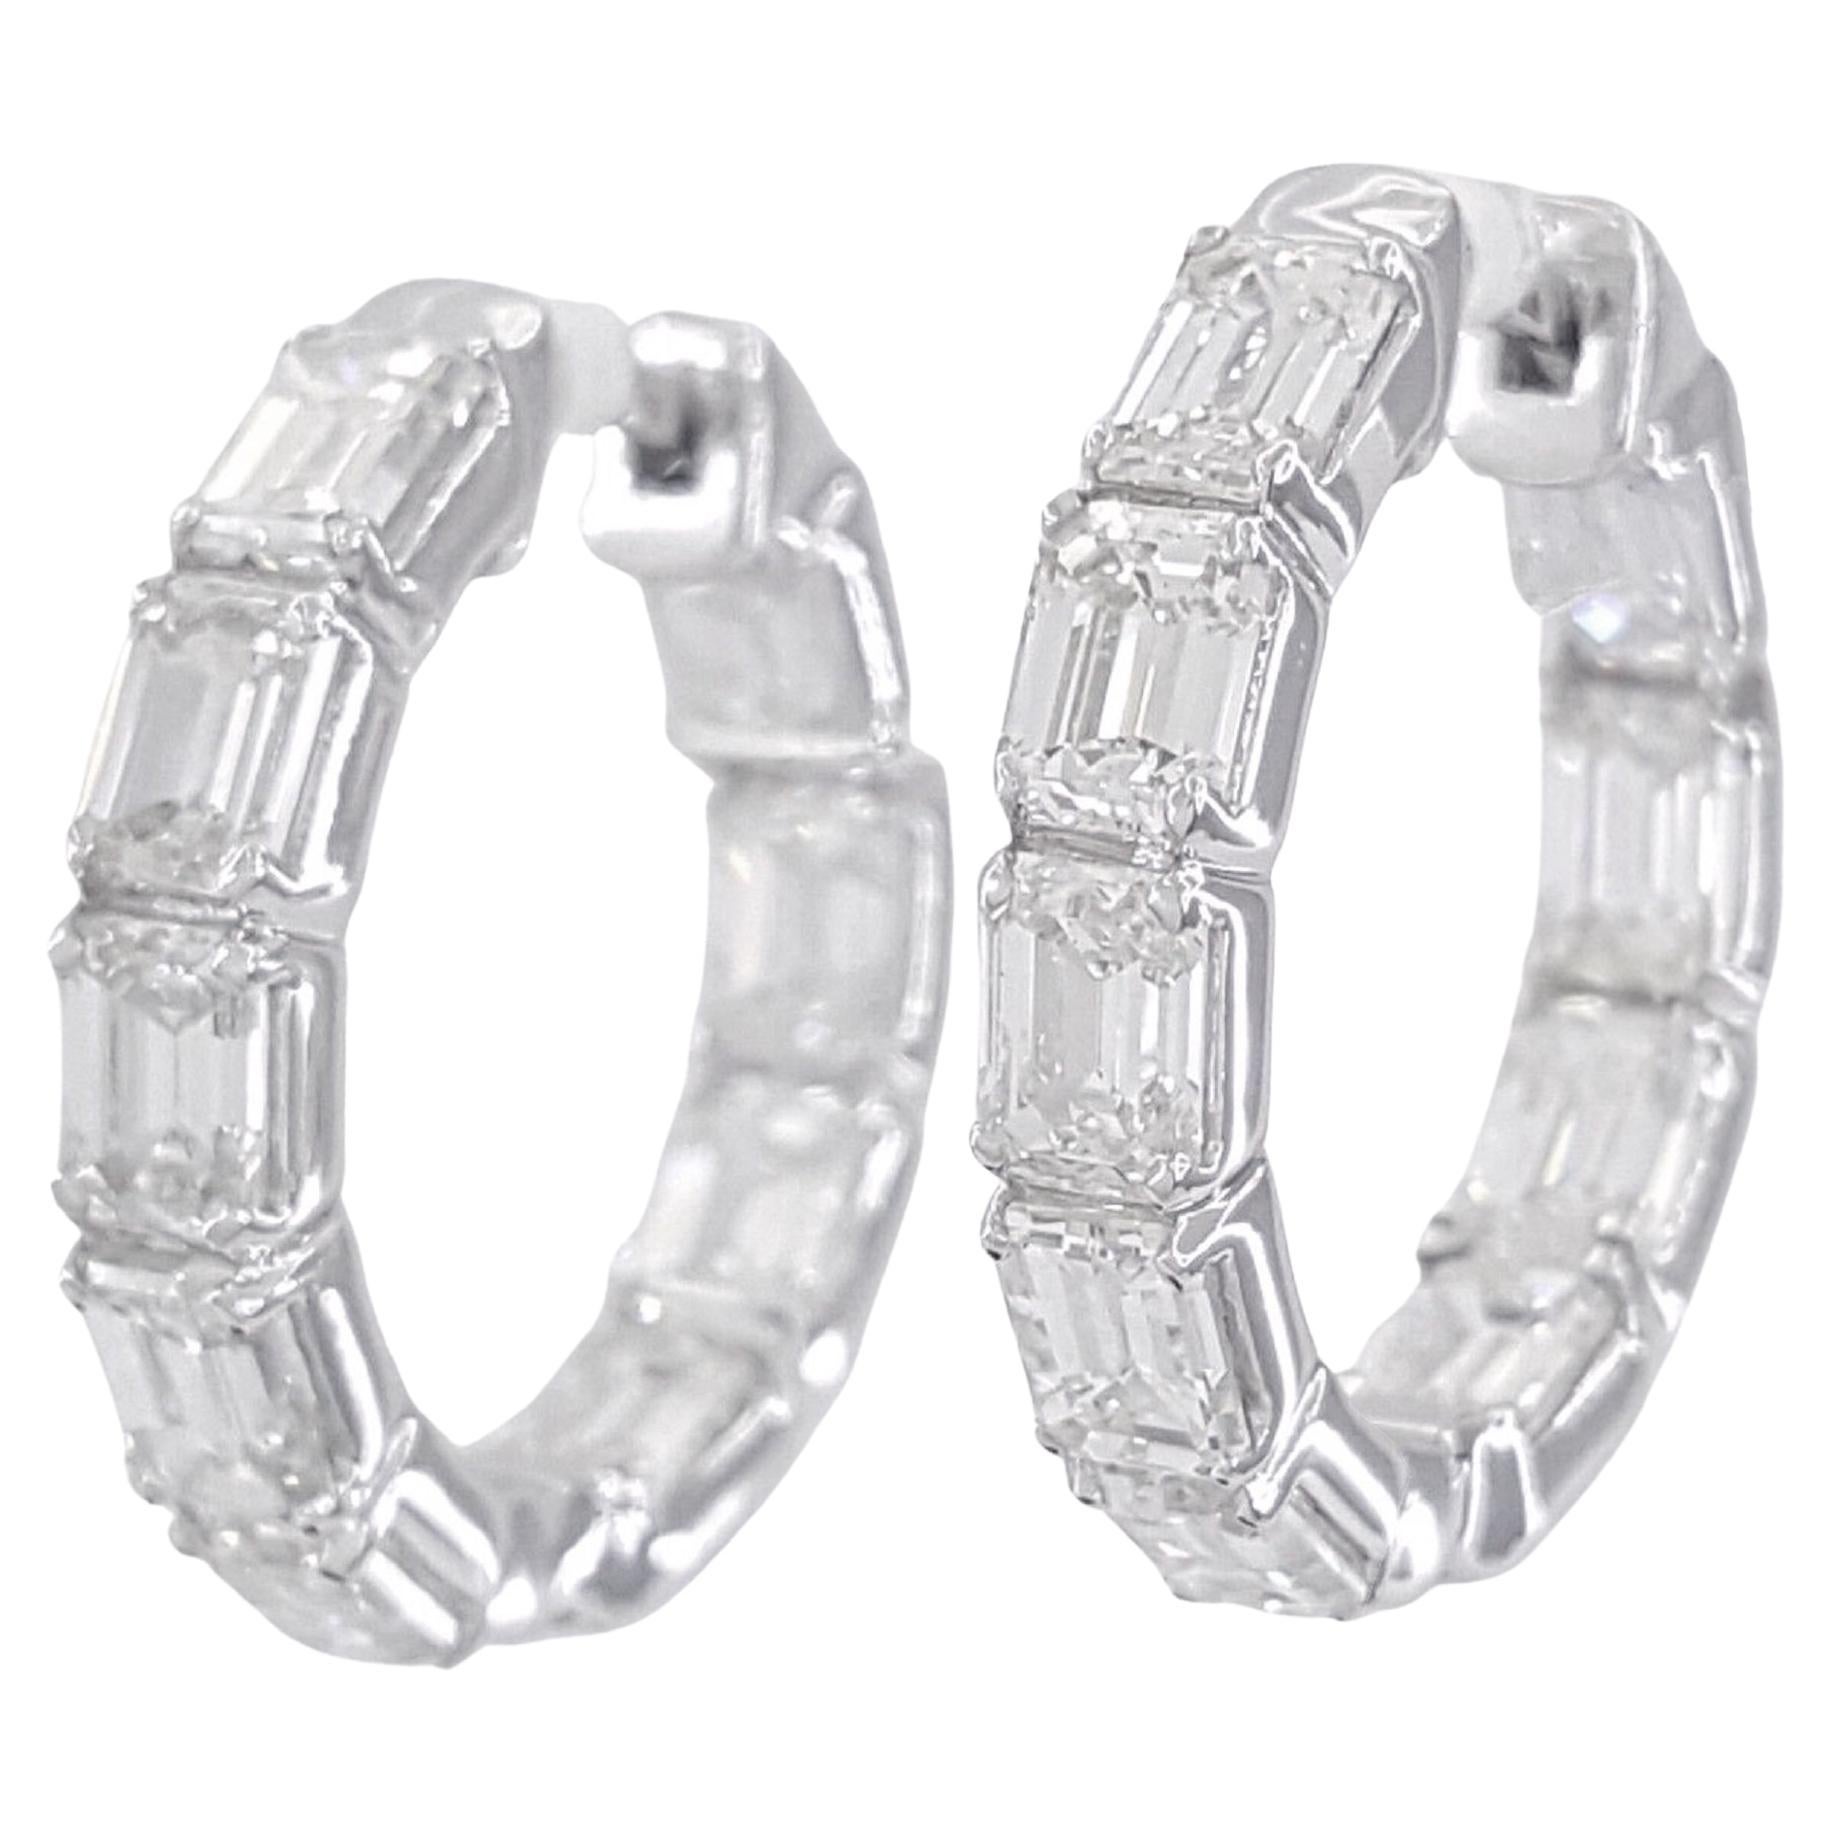 5 Carat Emerald Cut Diamond Earrings Set in White Gold For Sale